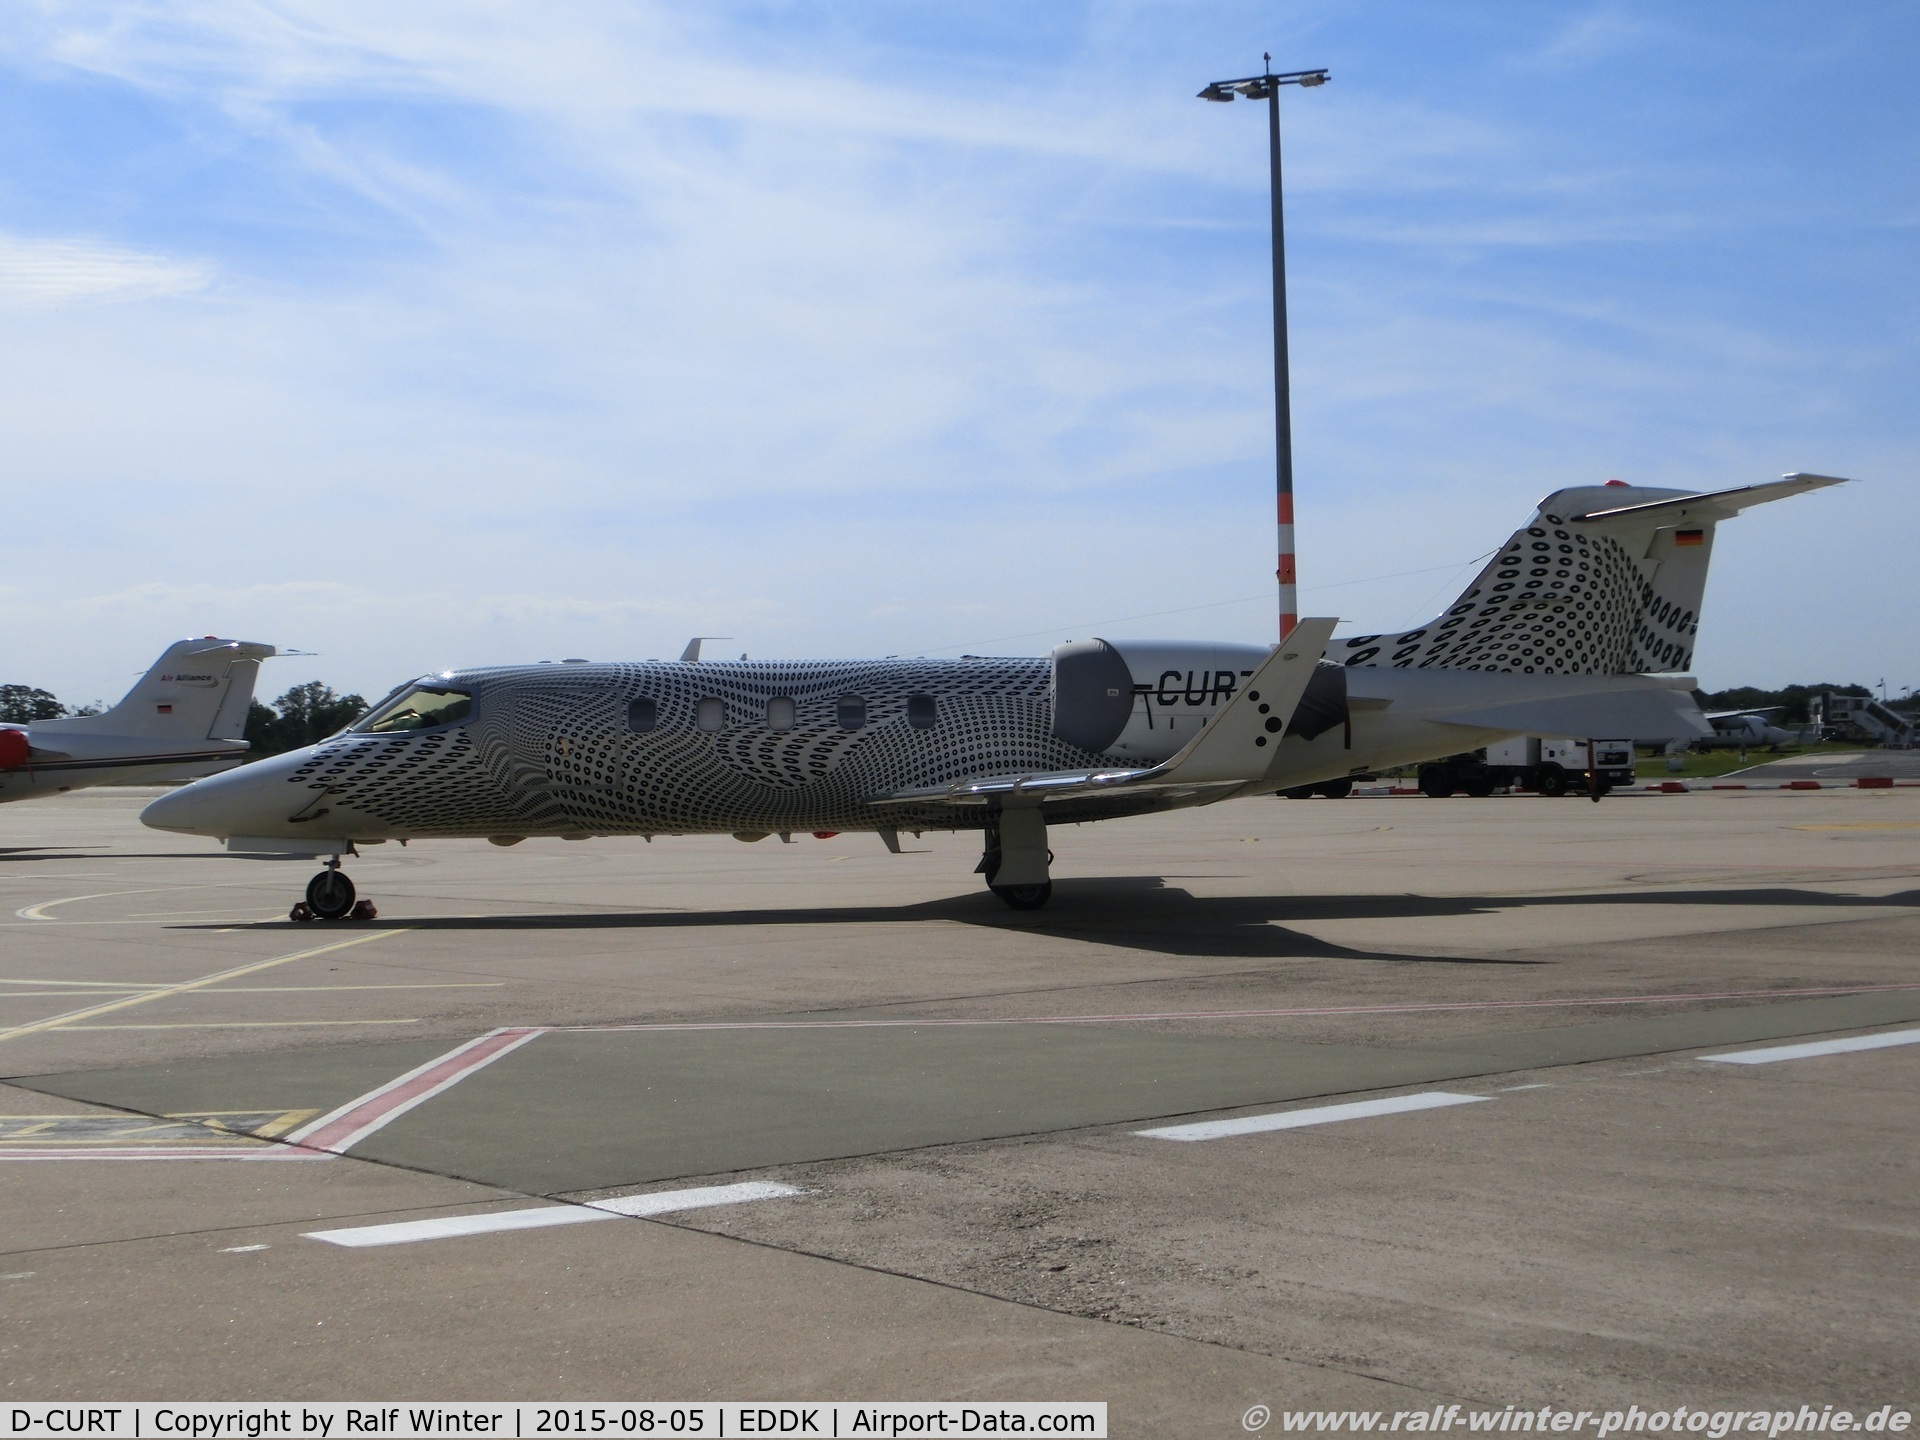 D-CURT, 1991 Learjet 31A C/N 31A-042, Learjet 31 - AYY Air Alliance Express - 31-042 - D-CURT - 05.08.2015 - CGN